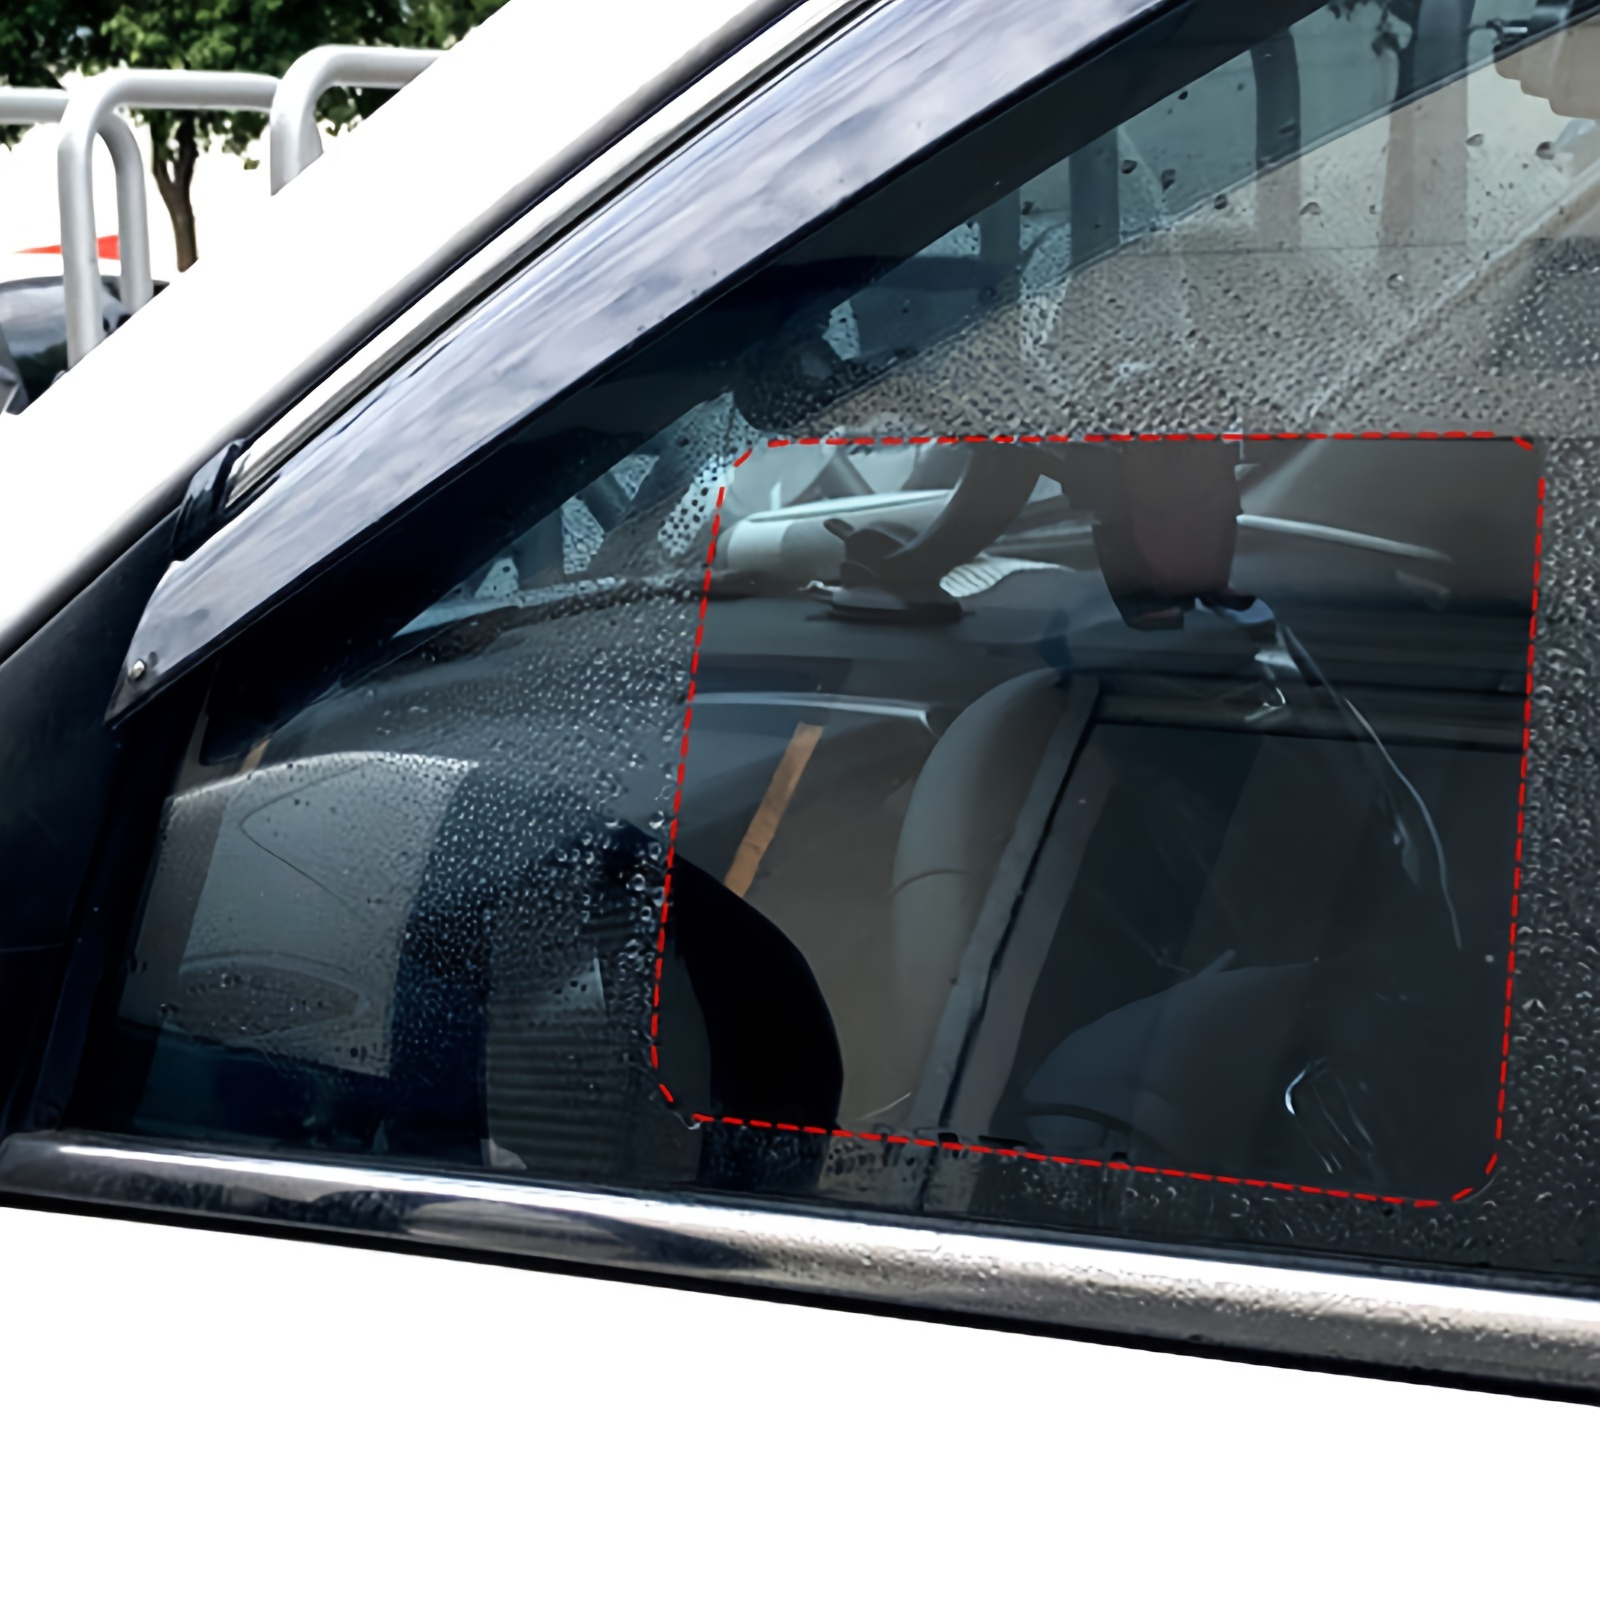 

2pcs Car Side Window Film Glass Rainproof Anti-fog Film Window Film Mirror Sticker, 16*20cm/6.29*7.87in